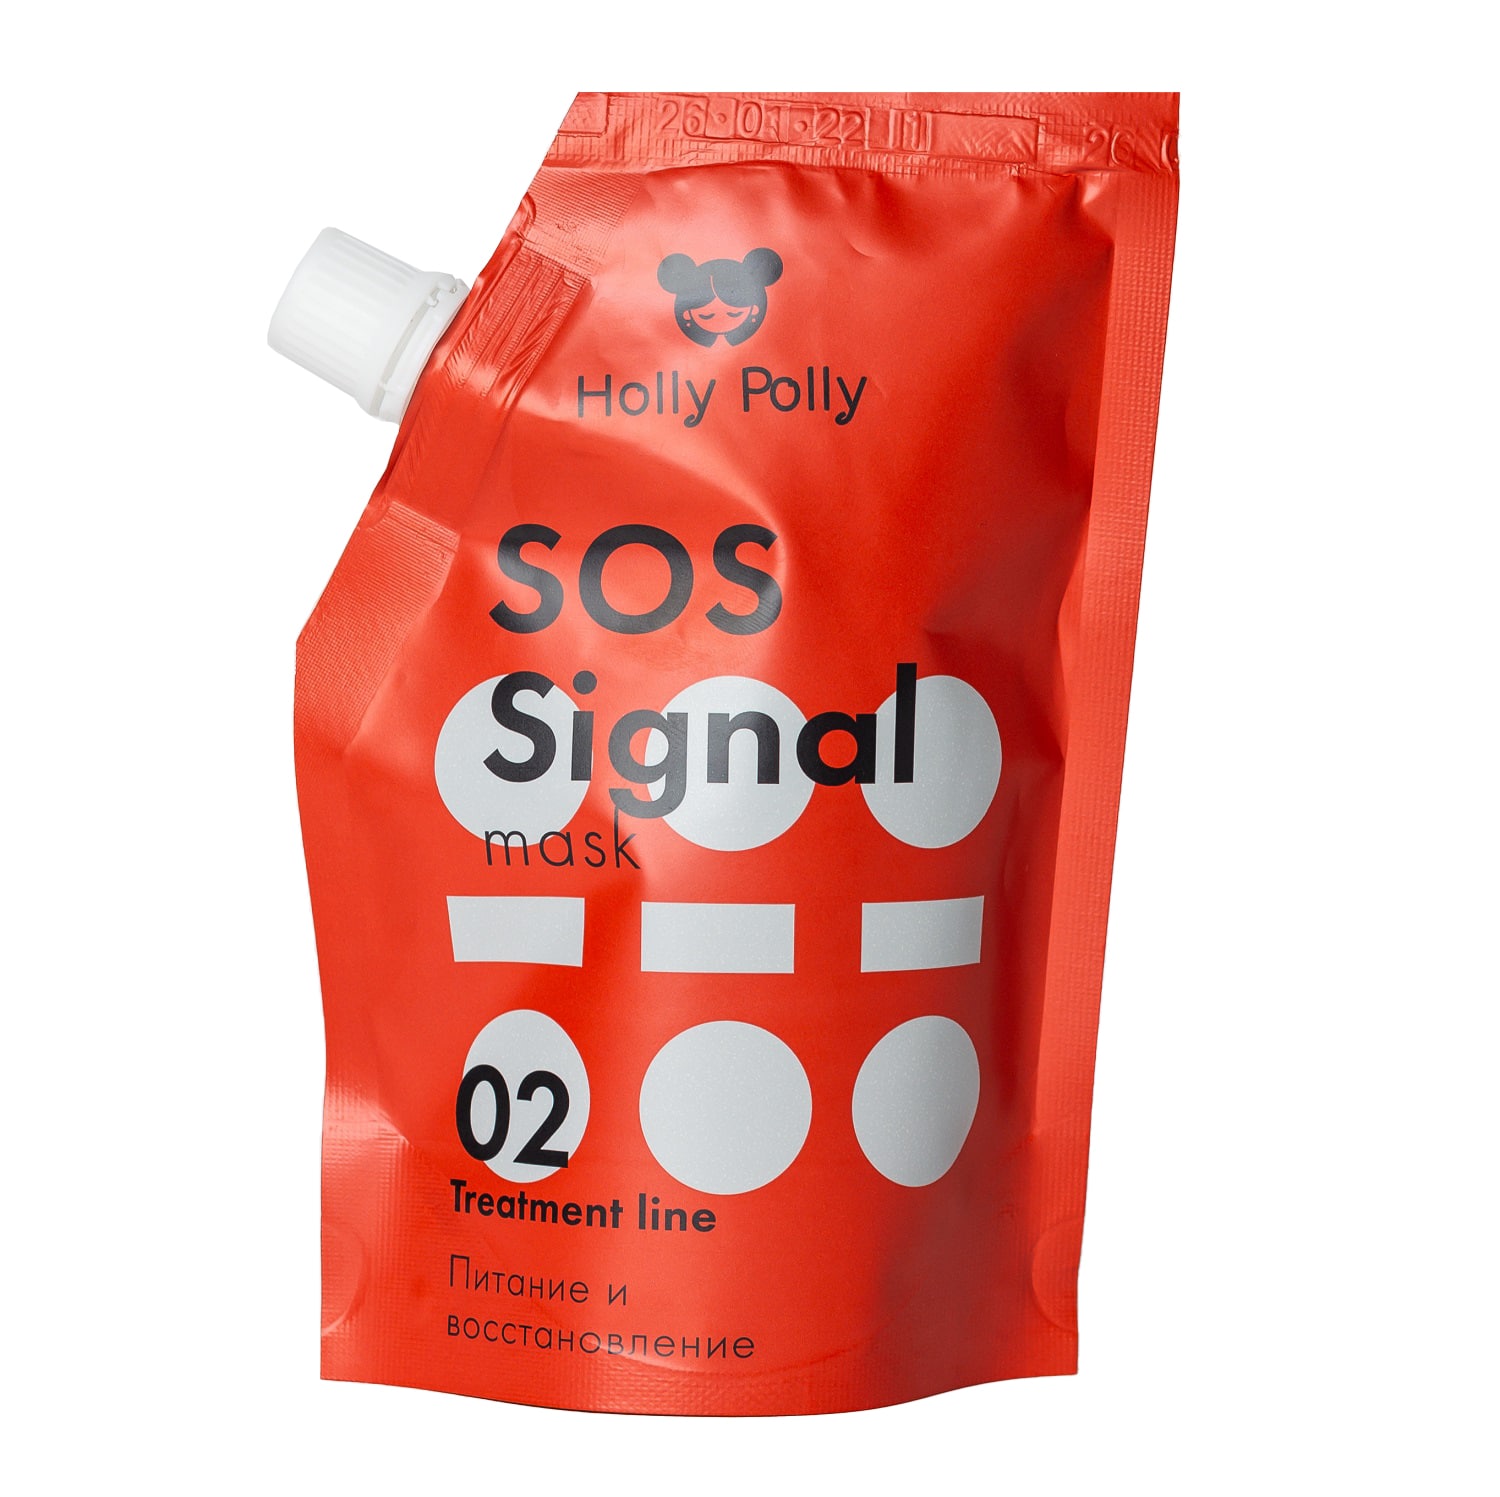 Holly Polly Экстра-питательная маска для волос SOS Signal, 100 мл (Holly Polly, Treatment Line)